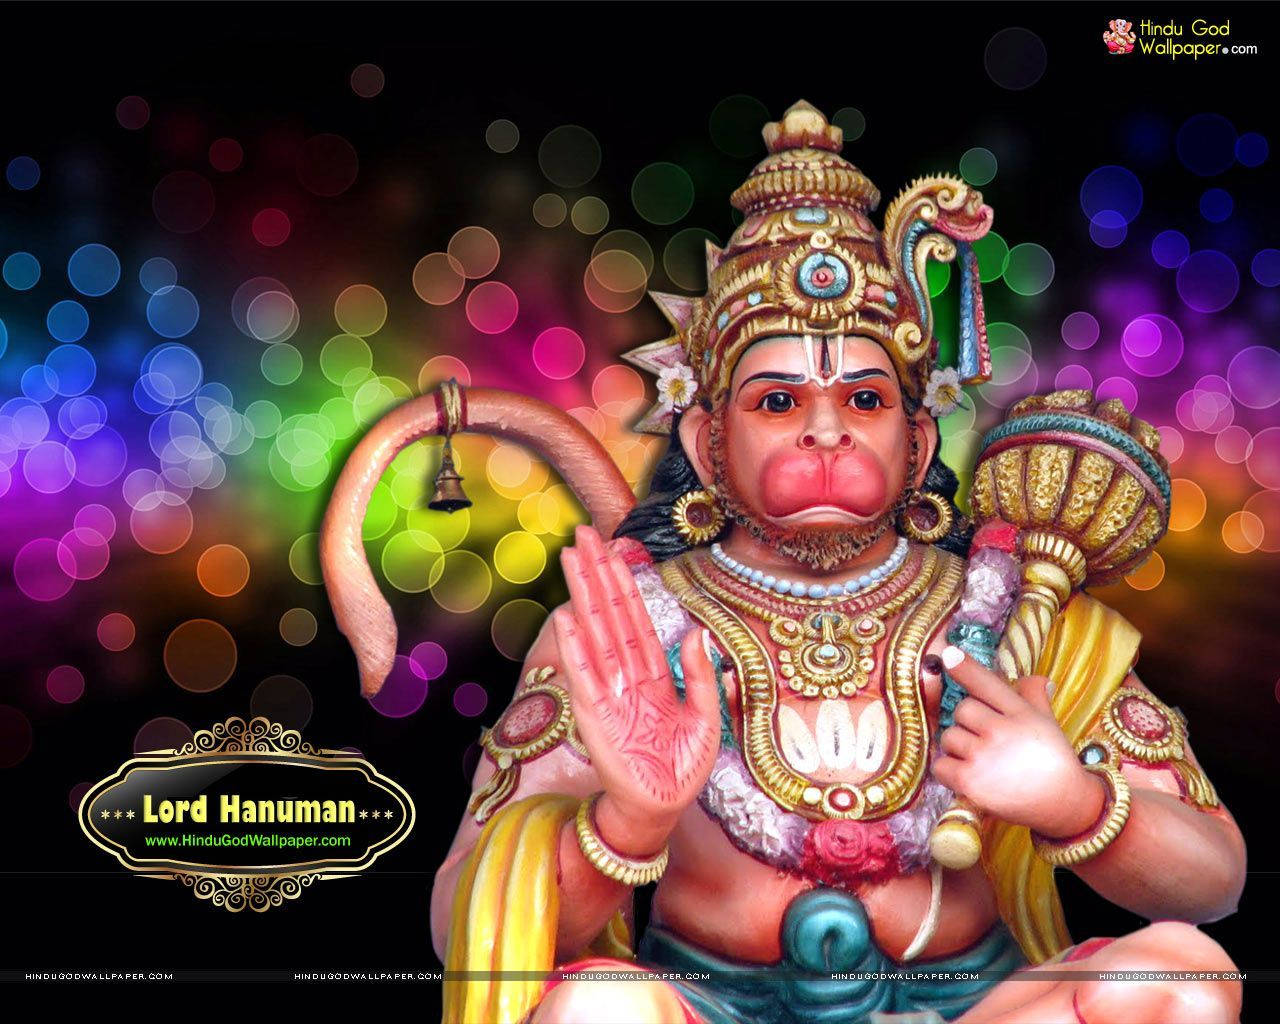 Vred Hanuman med farverige lys tapet. Wallpaper